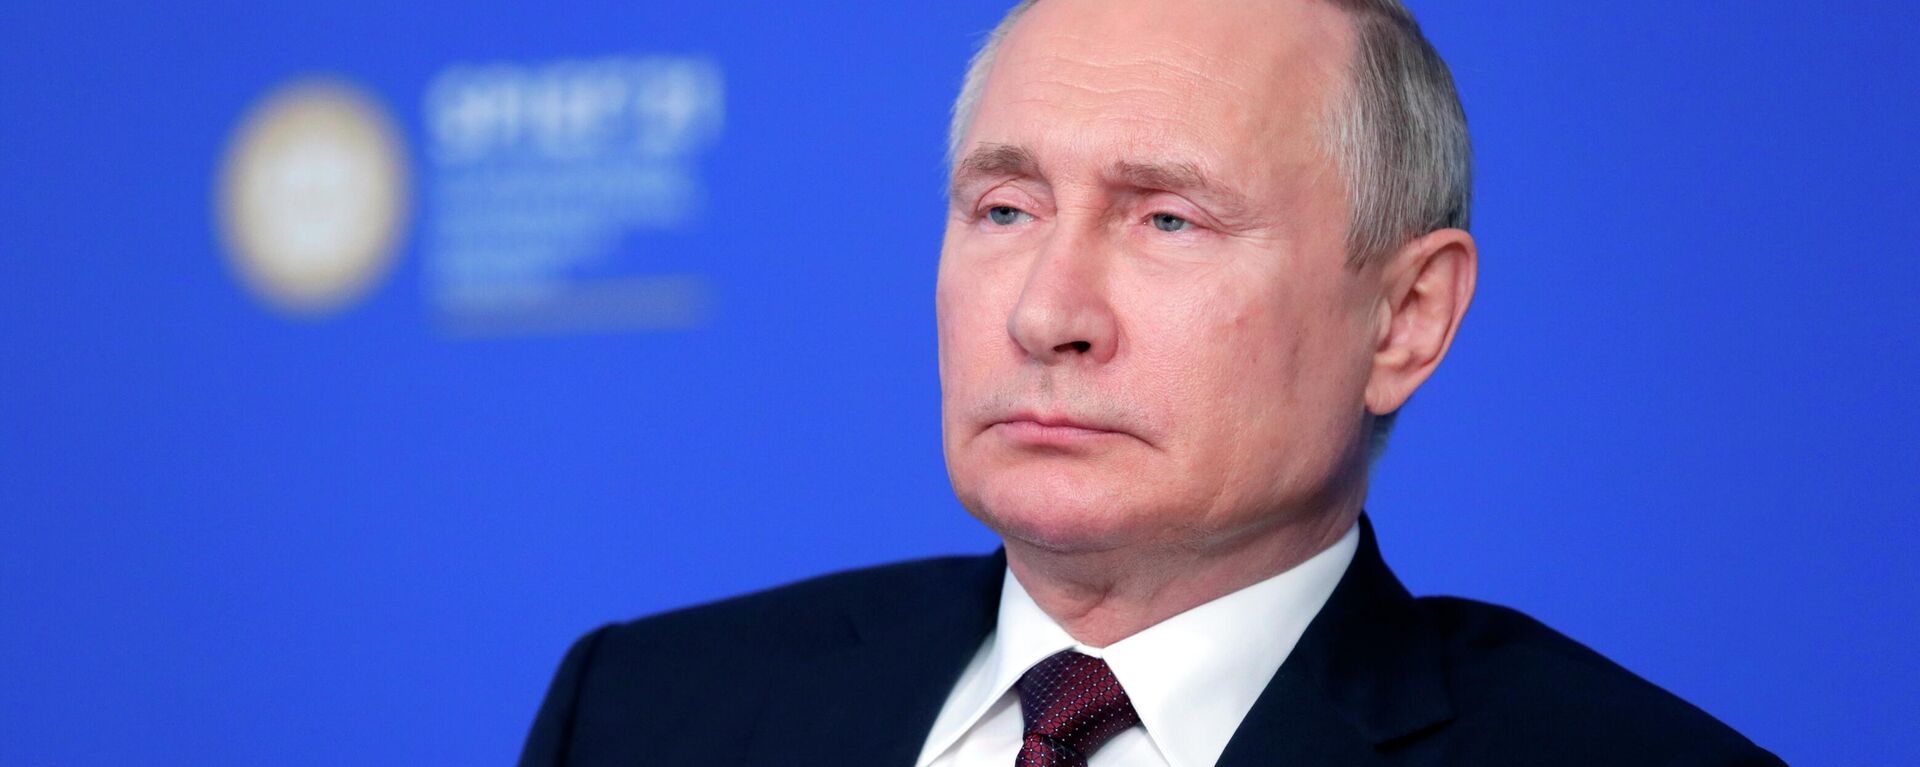 Vladímir Putin, presidente de Rusia - Sputnik Mundo, 1920, 14.08.2021